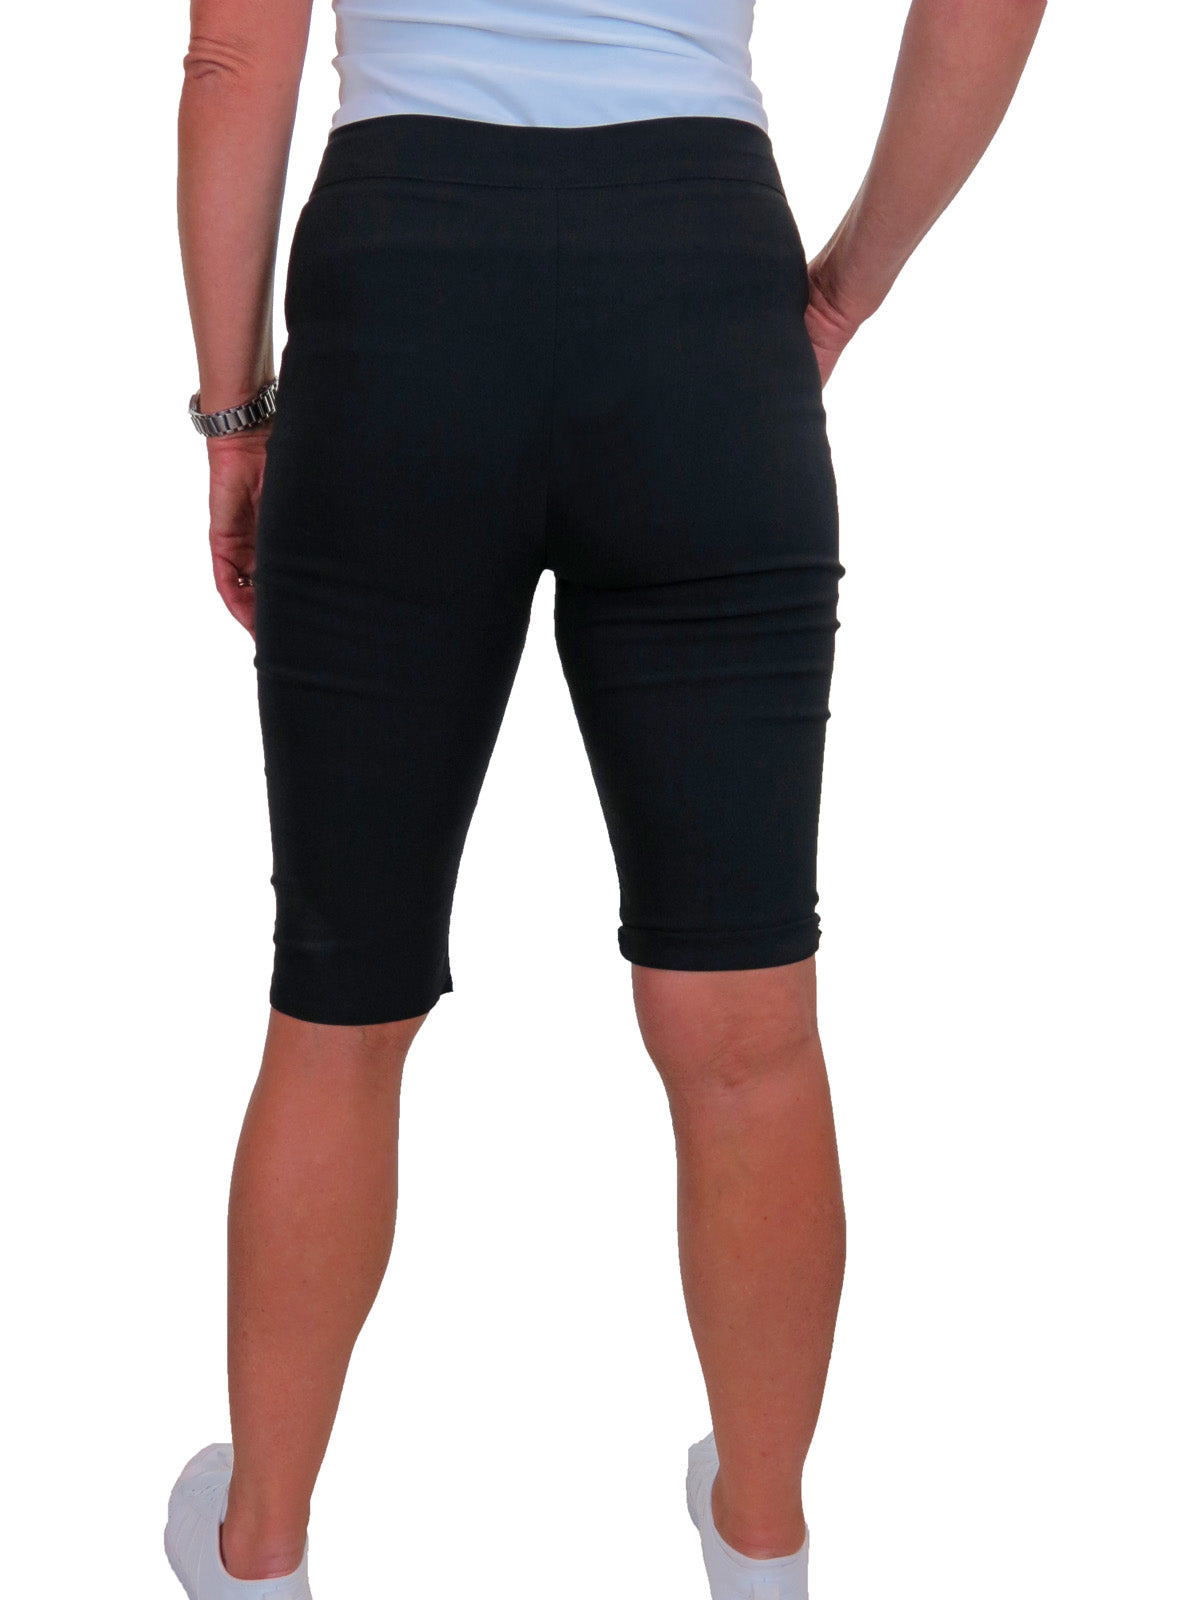 Womens High Waist Skinny Stretch Pedal Pusher Style Summer Shorts Black